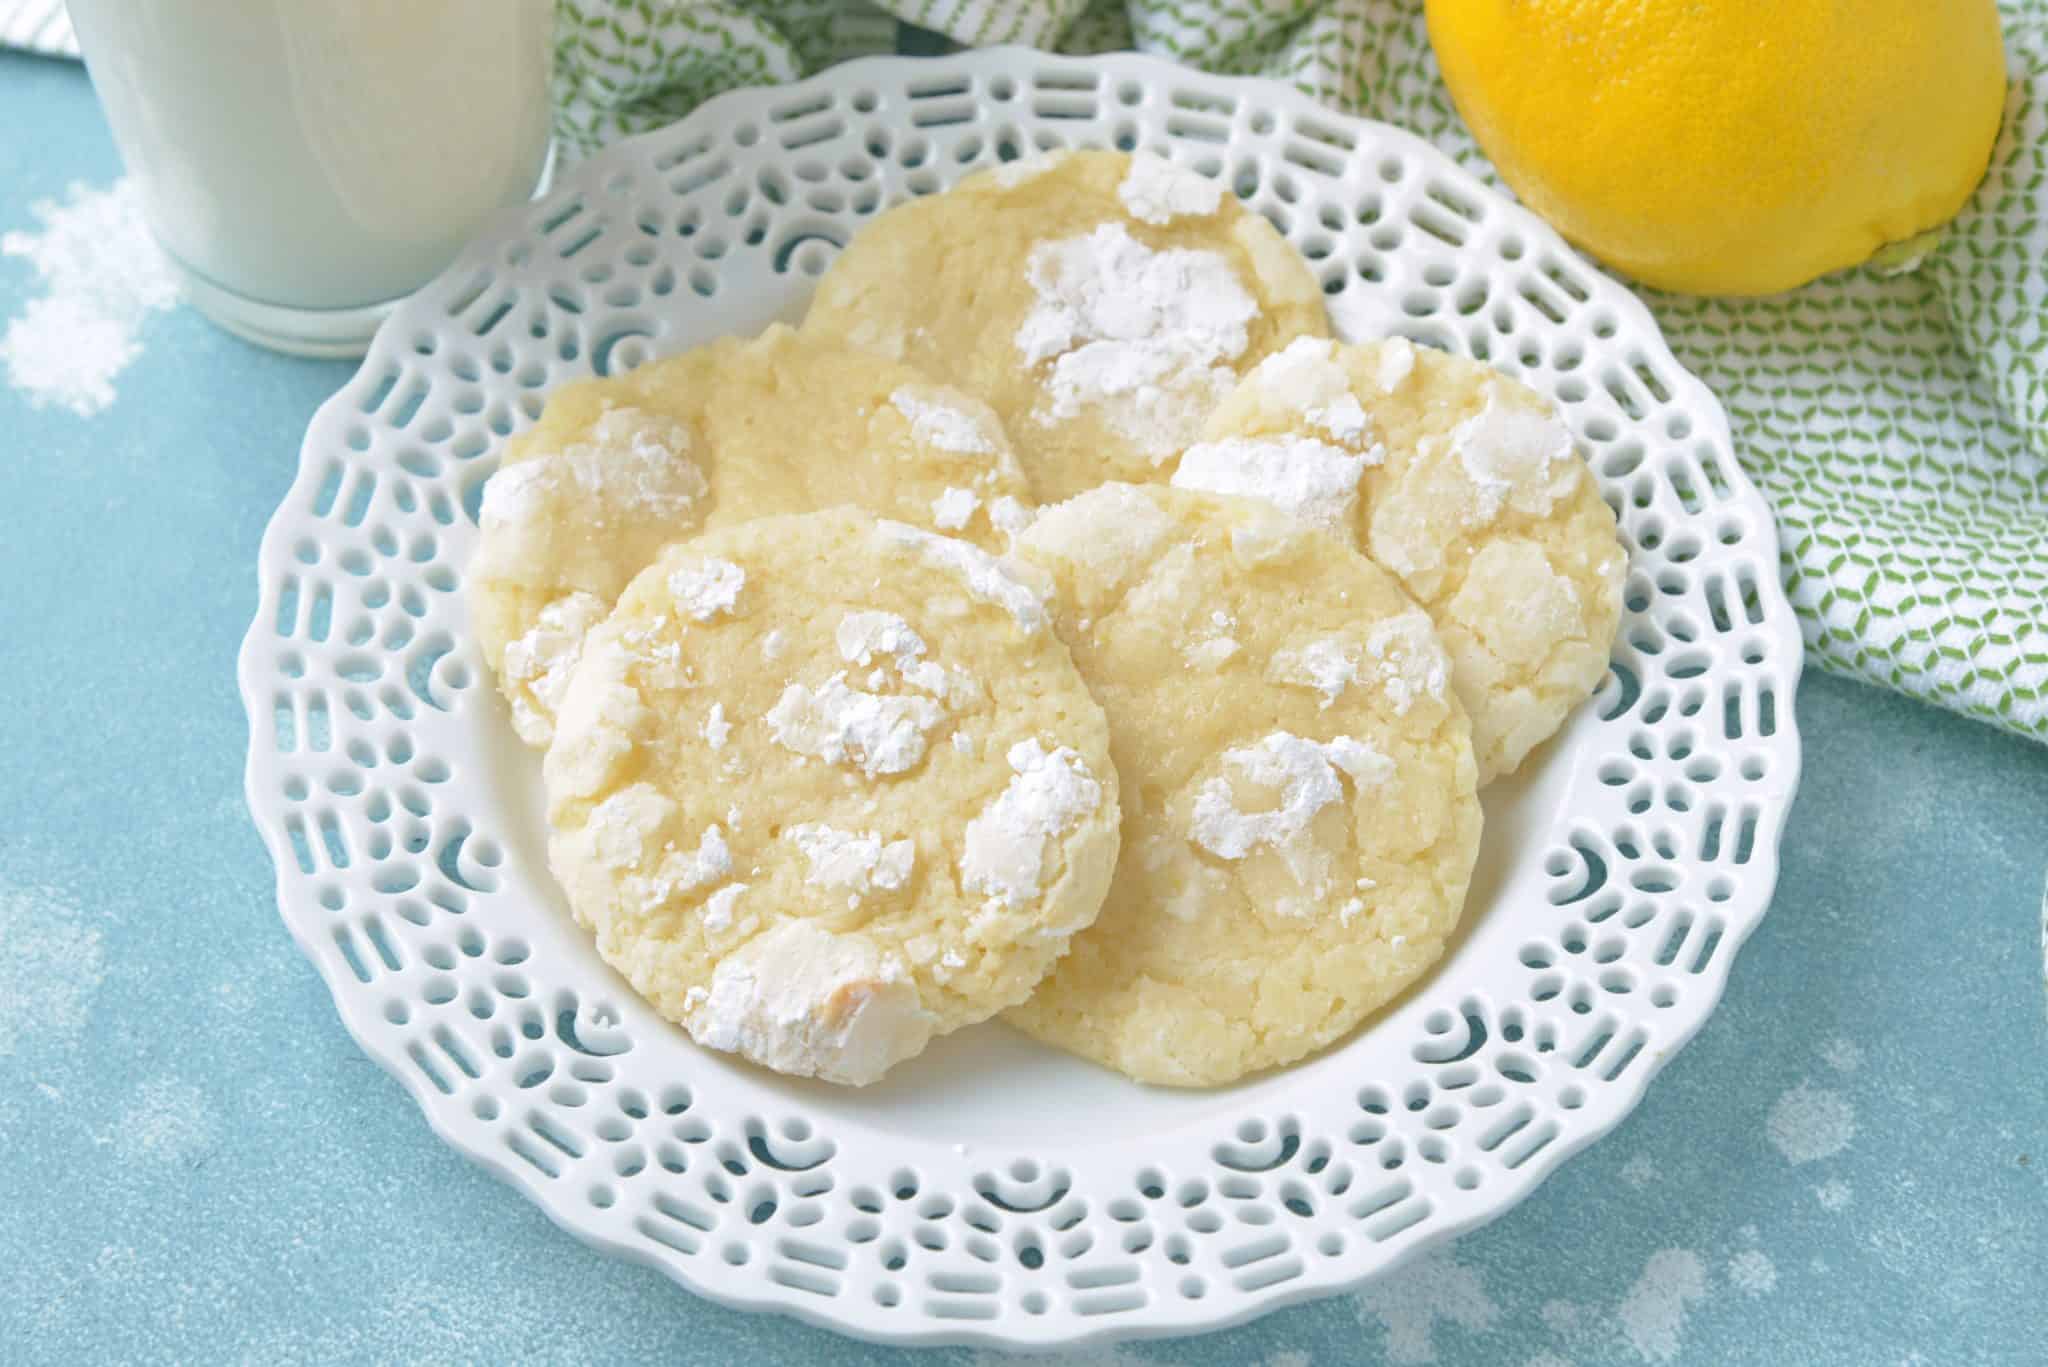 Lemon Cooler Cookies, also known as Sunshine Lemon Coolers, are a classic cookie recipe using fresh lemon and powdered sugar. #lemoncoolercookies #lemoncoolers #lemoncookies www.savoryexperiments.com 